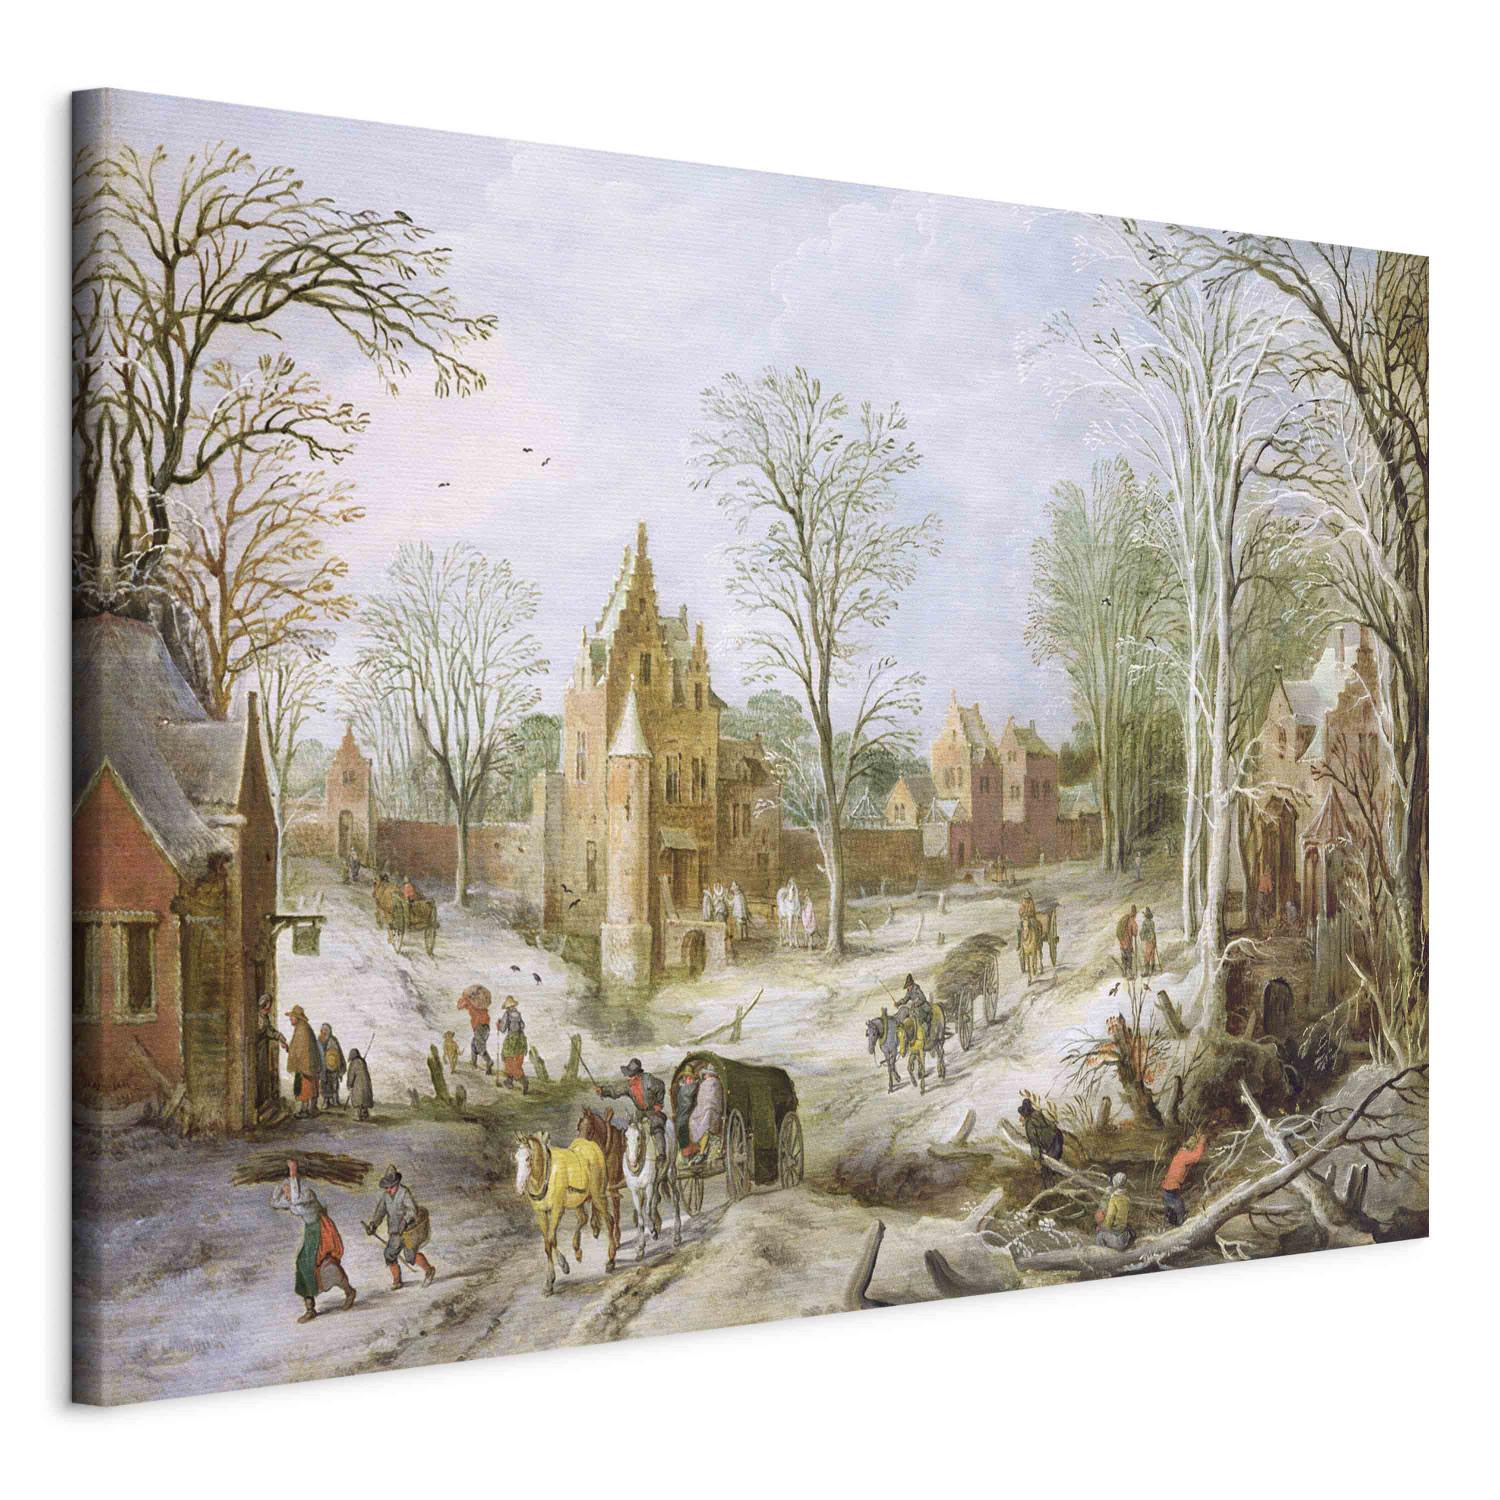 Reproducción de cuadro A wooded winter landscape with a cart